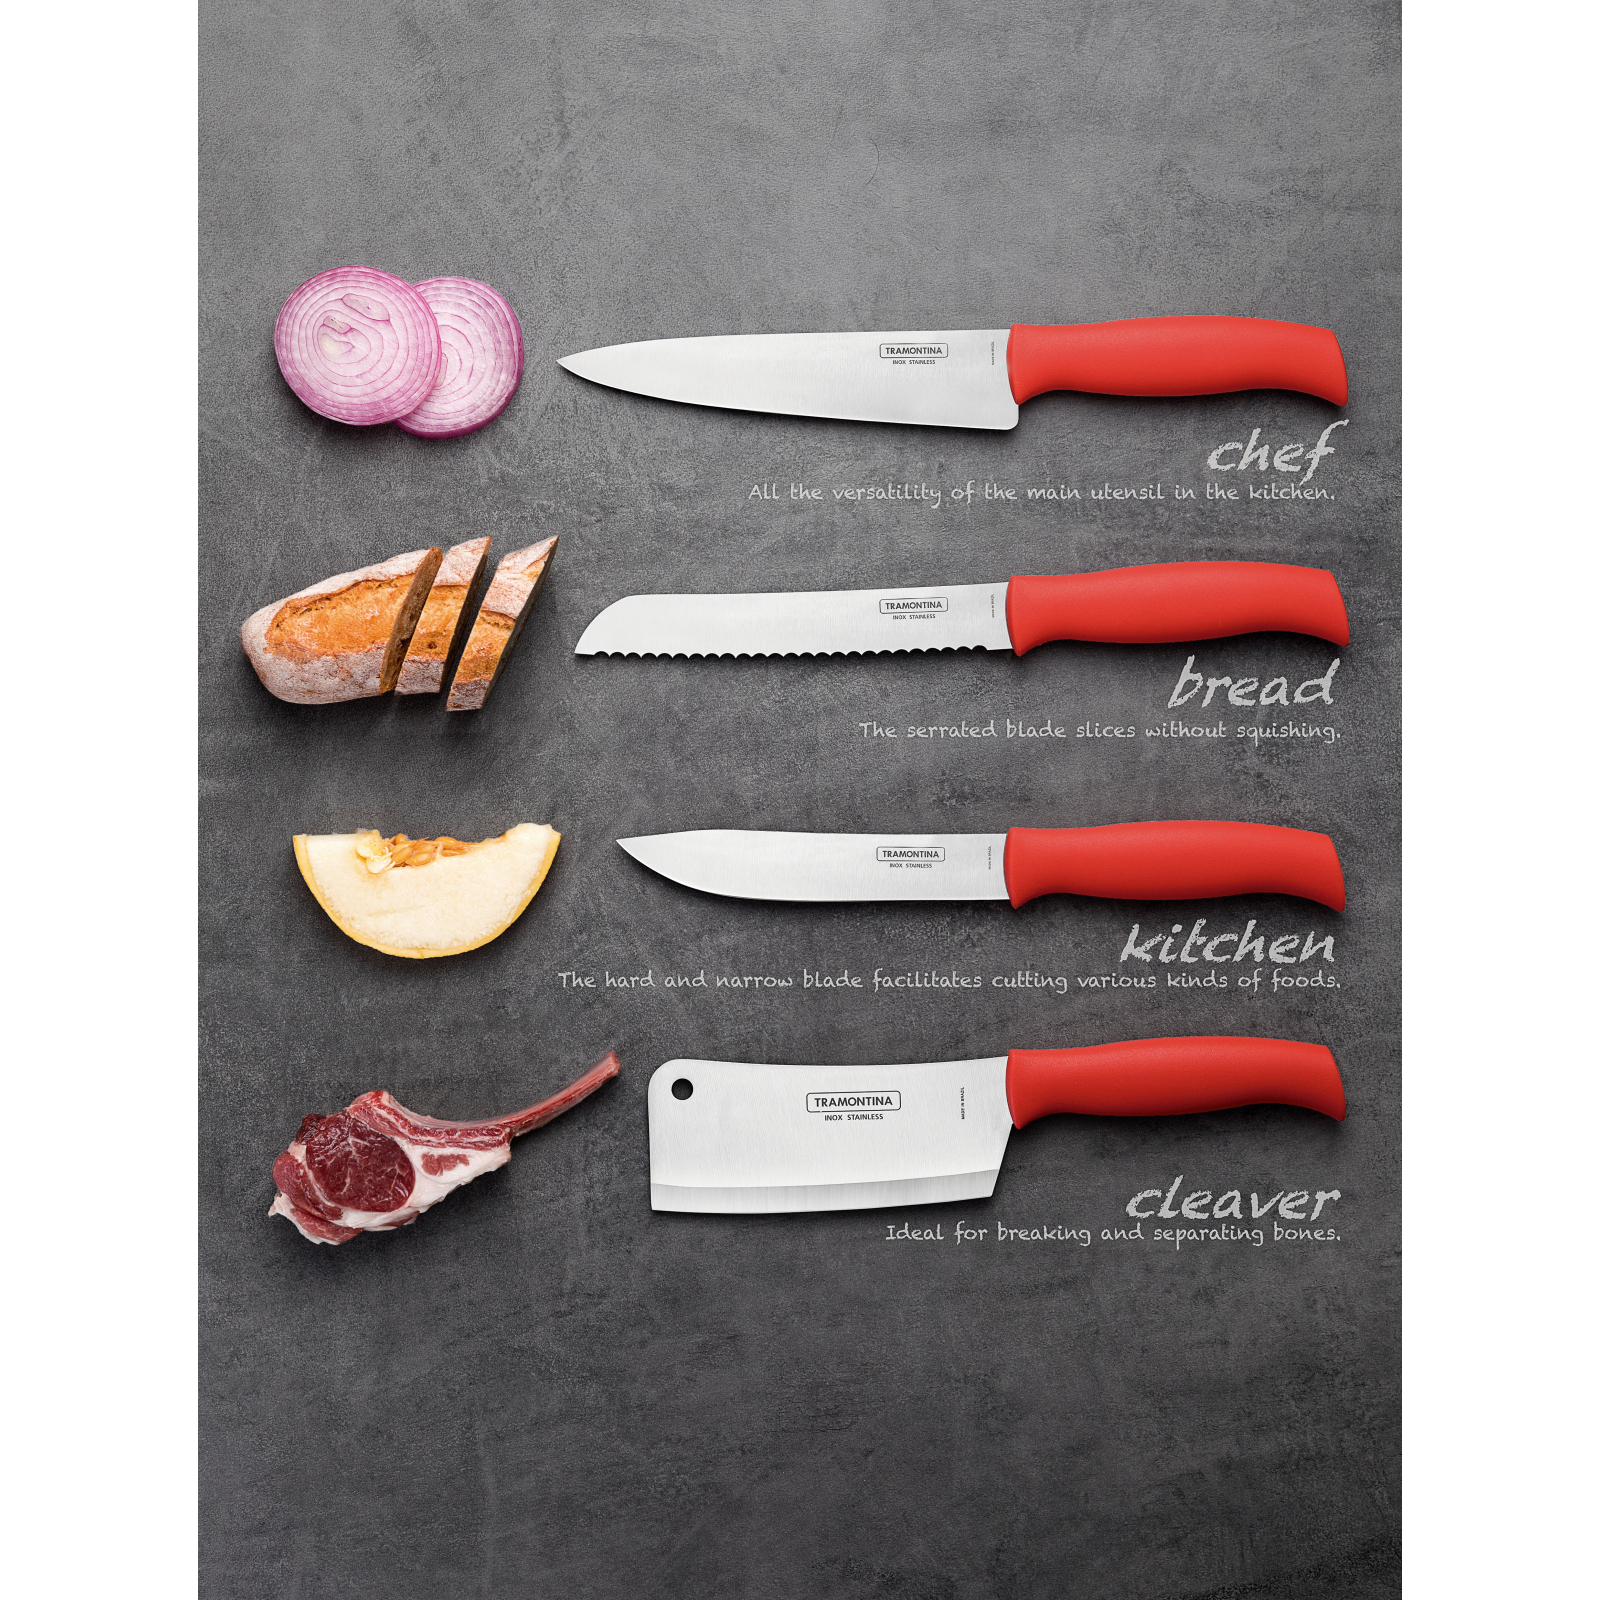 Кухонный нож Tramontina Soft Plus Red 76 мм (23659/173) изображение 6